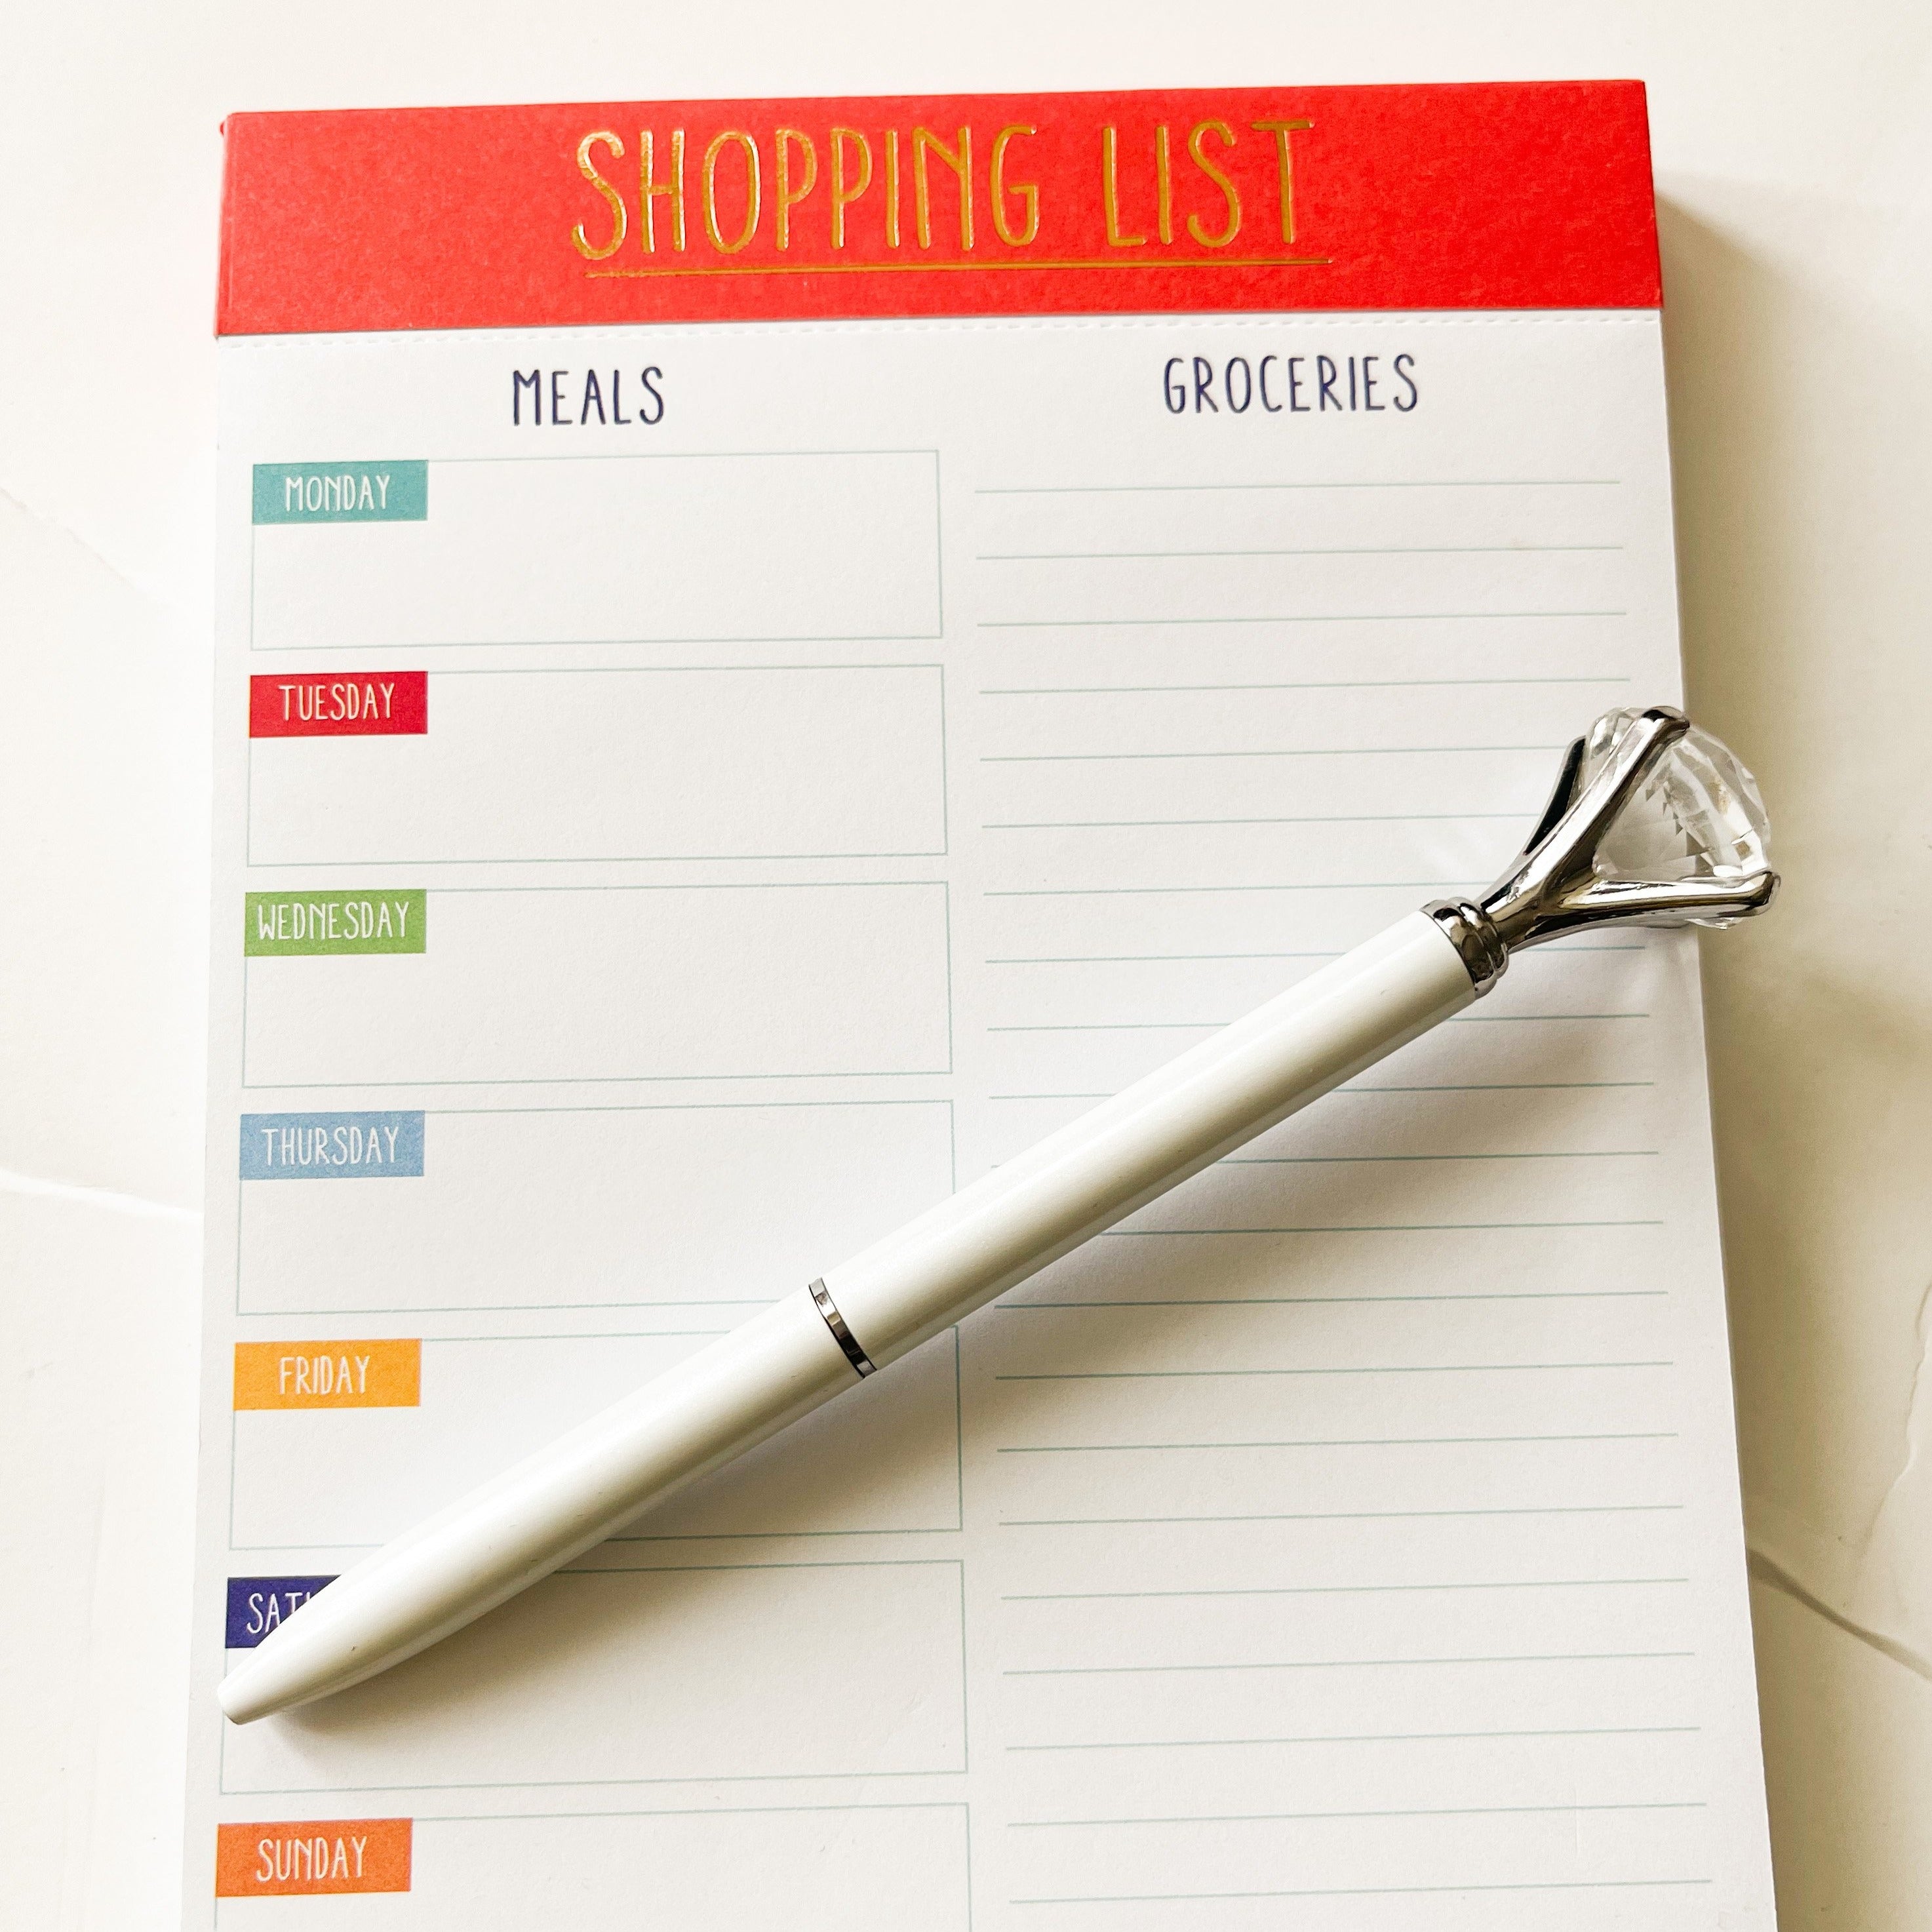 Shopping List + Diamond Pen